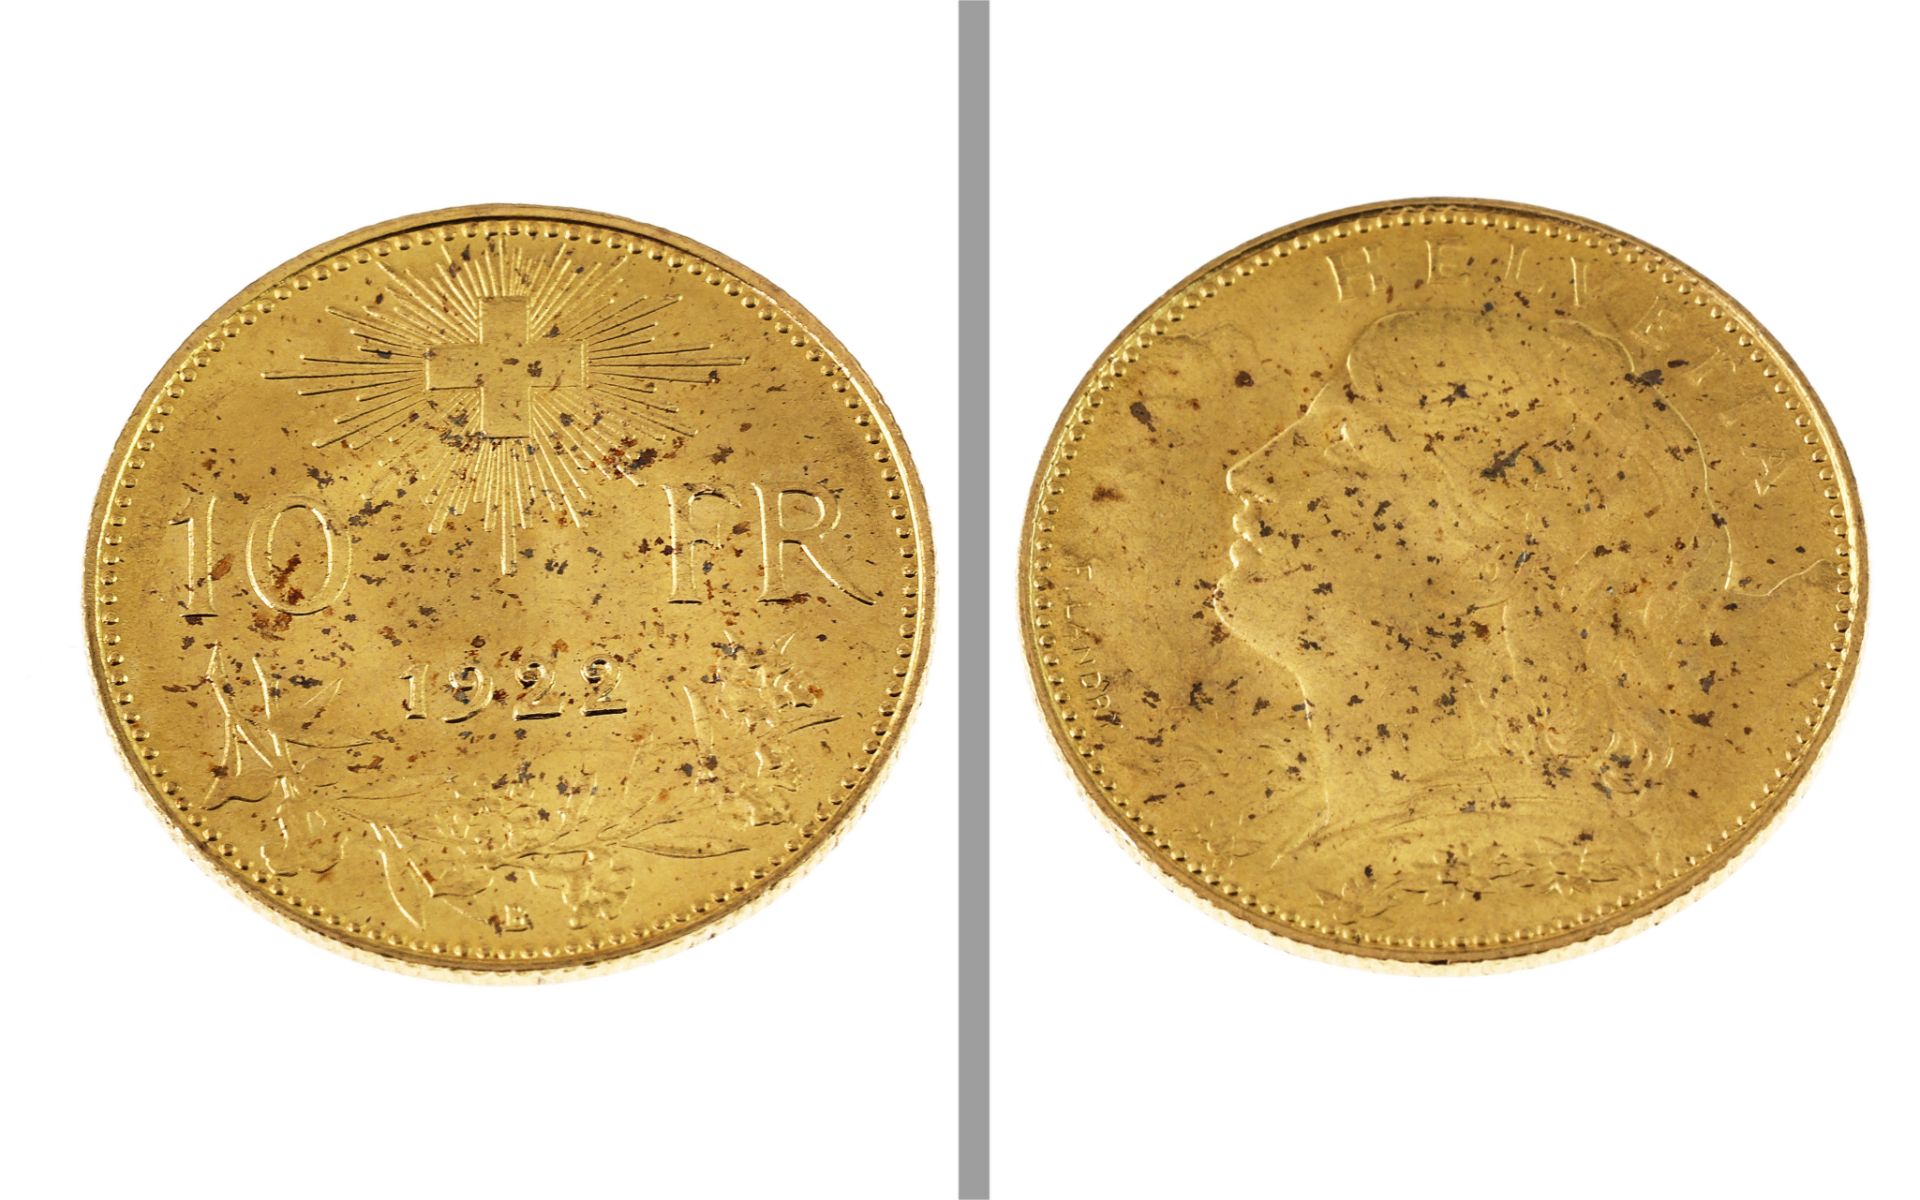 Goldmuenze Vreneli 10 Franken 3.21g 900- Gelbgold 1922